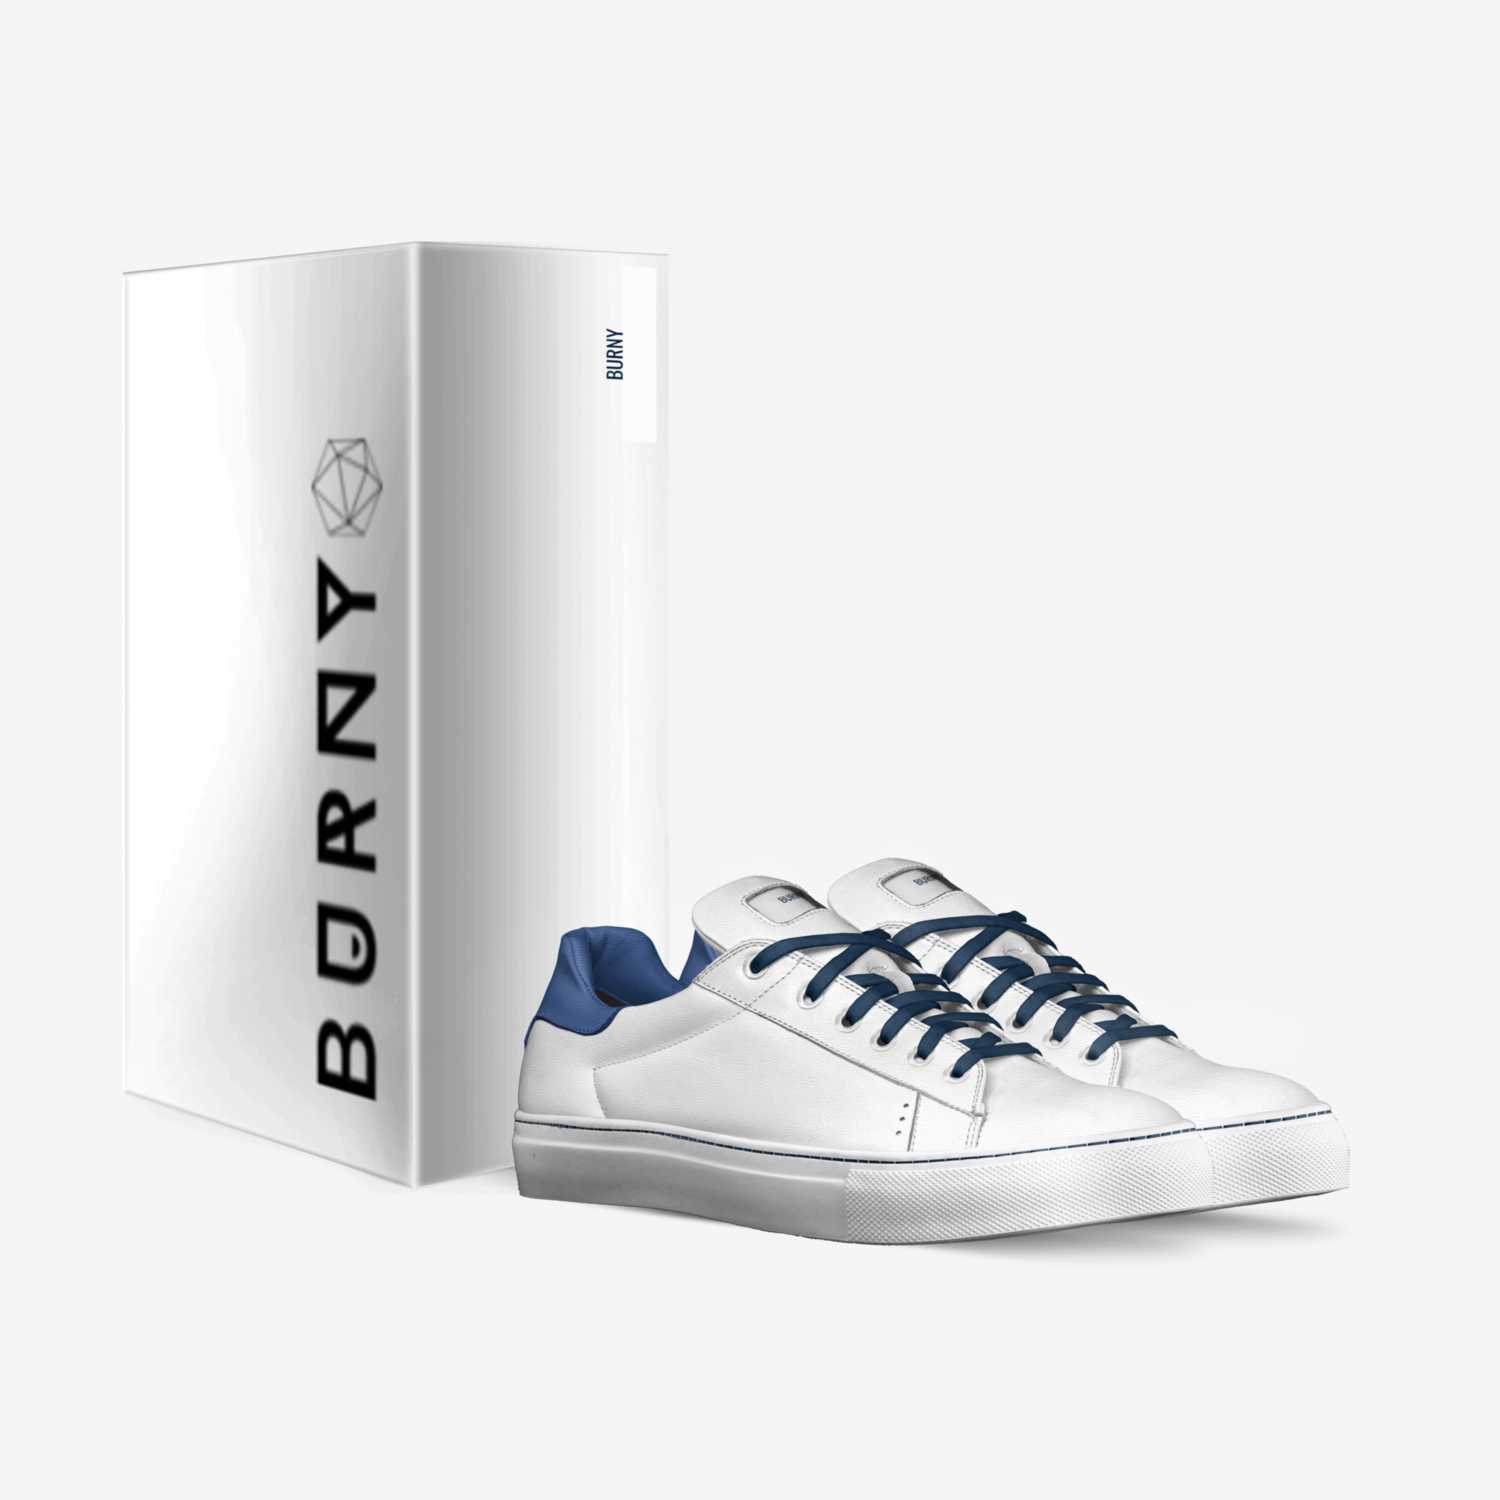 Burny custom made in Italy shoes by Rafael López Muñoz | Box view